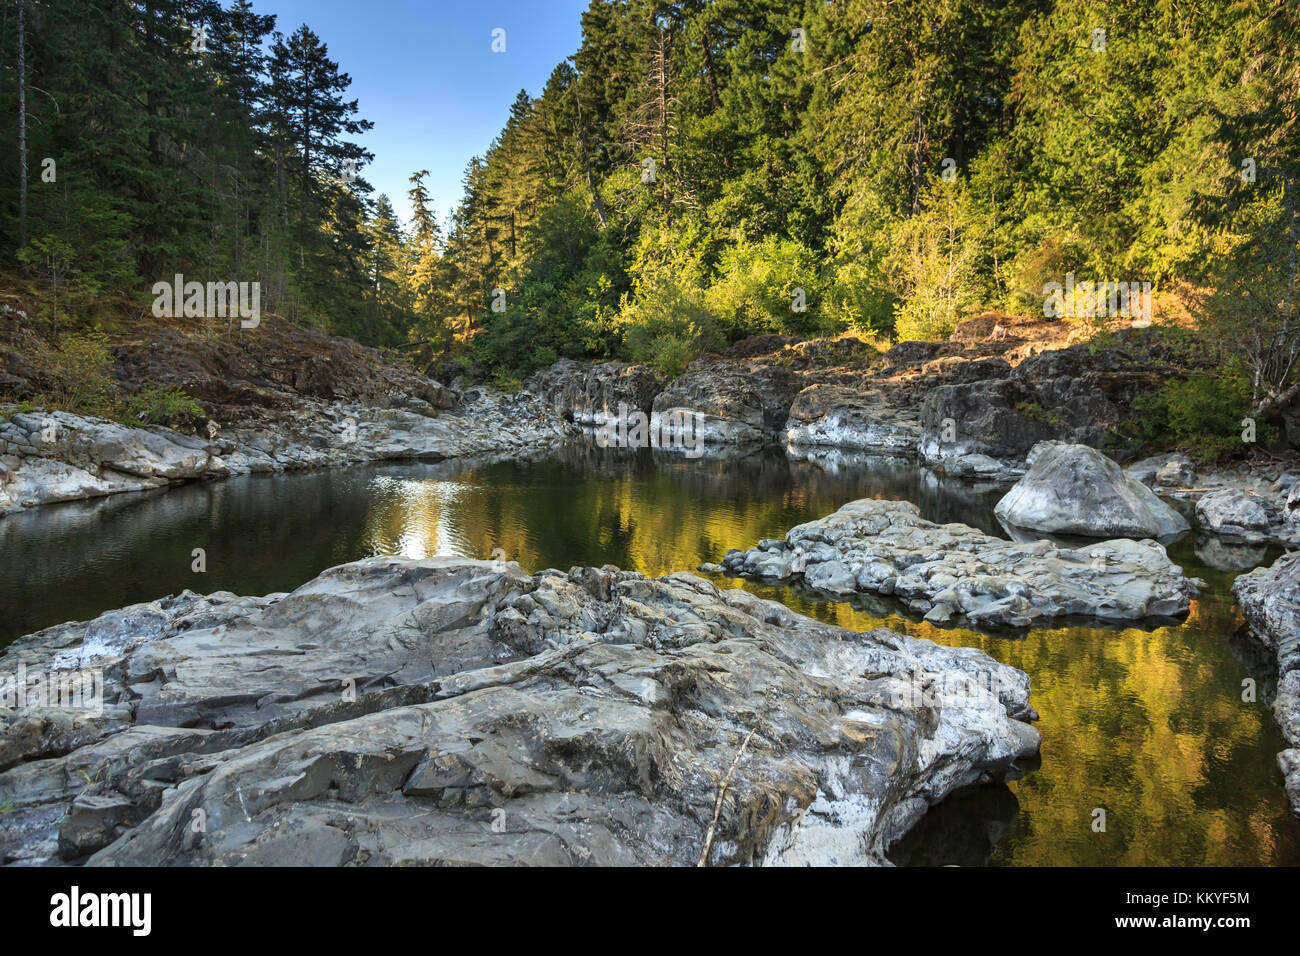 Site on Galluping Goose Trail, Sooke River, Sooke Potholes Provincial Park, near Sooke, Vancouver Island, British Columbia, Canada Stock Photo